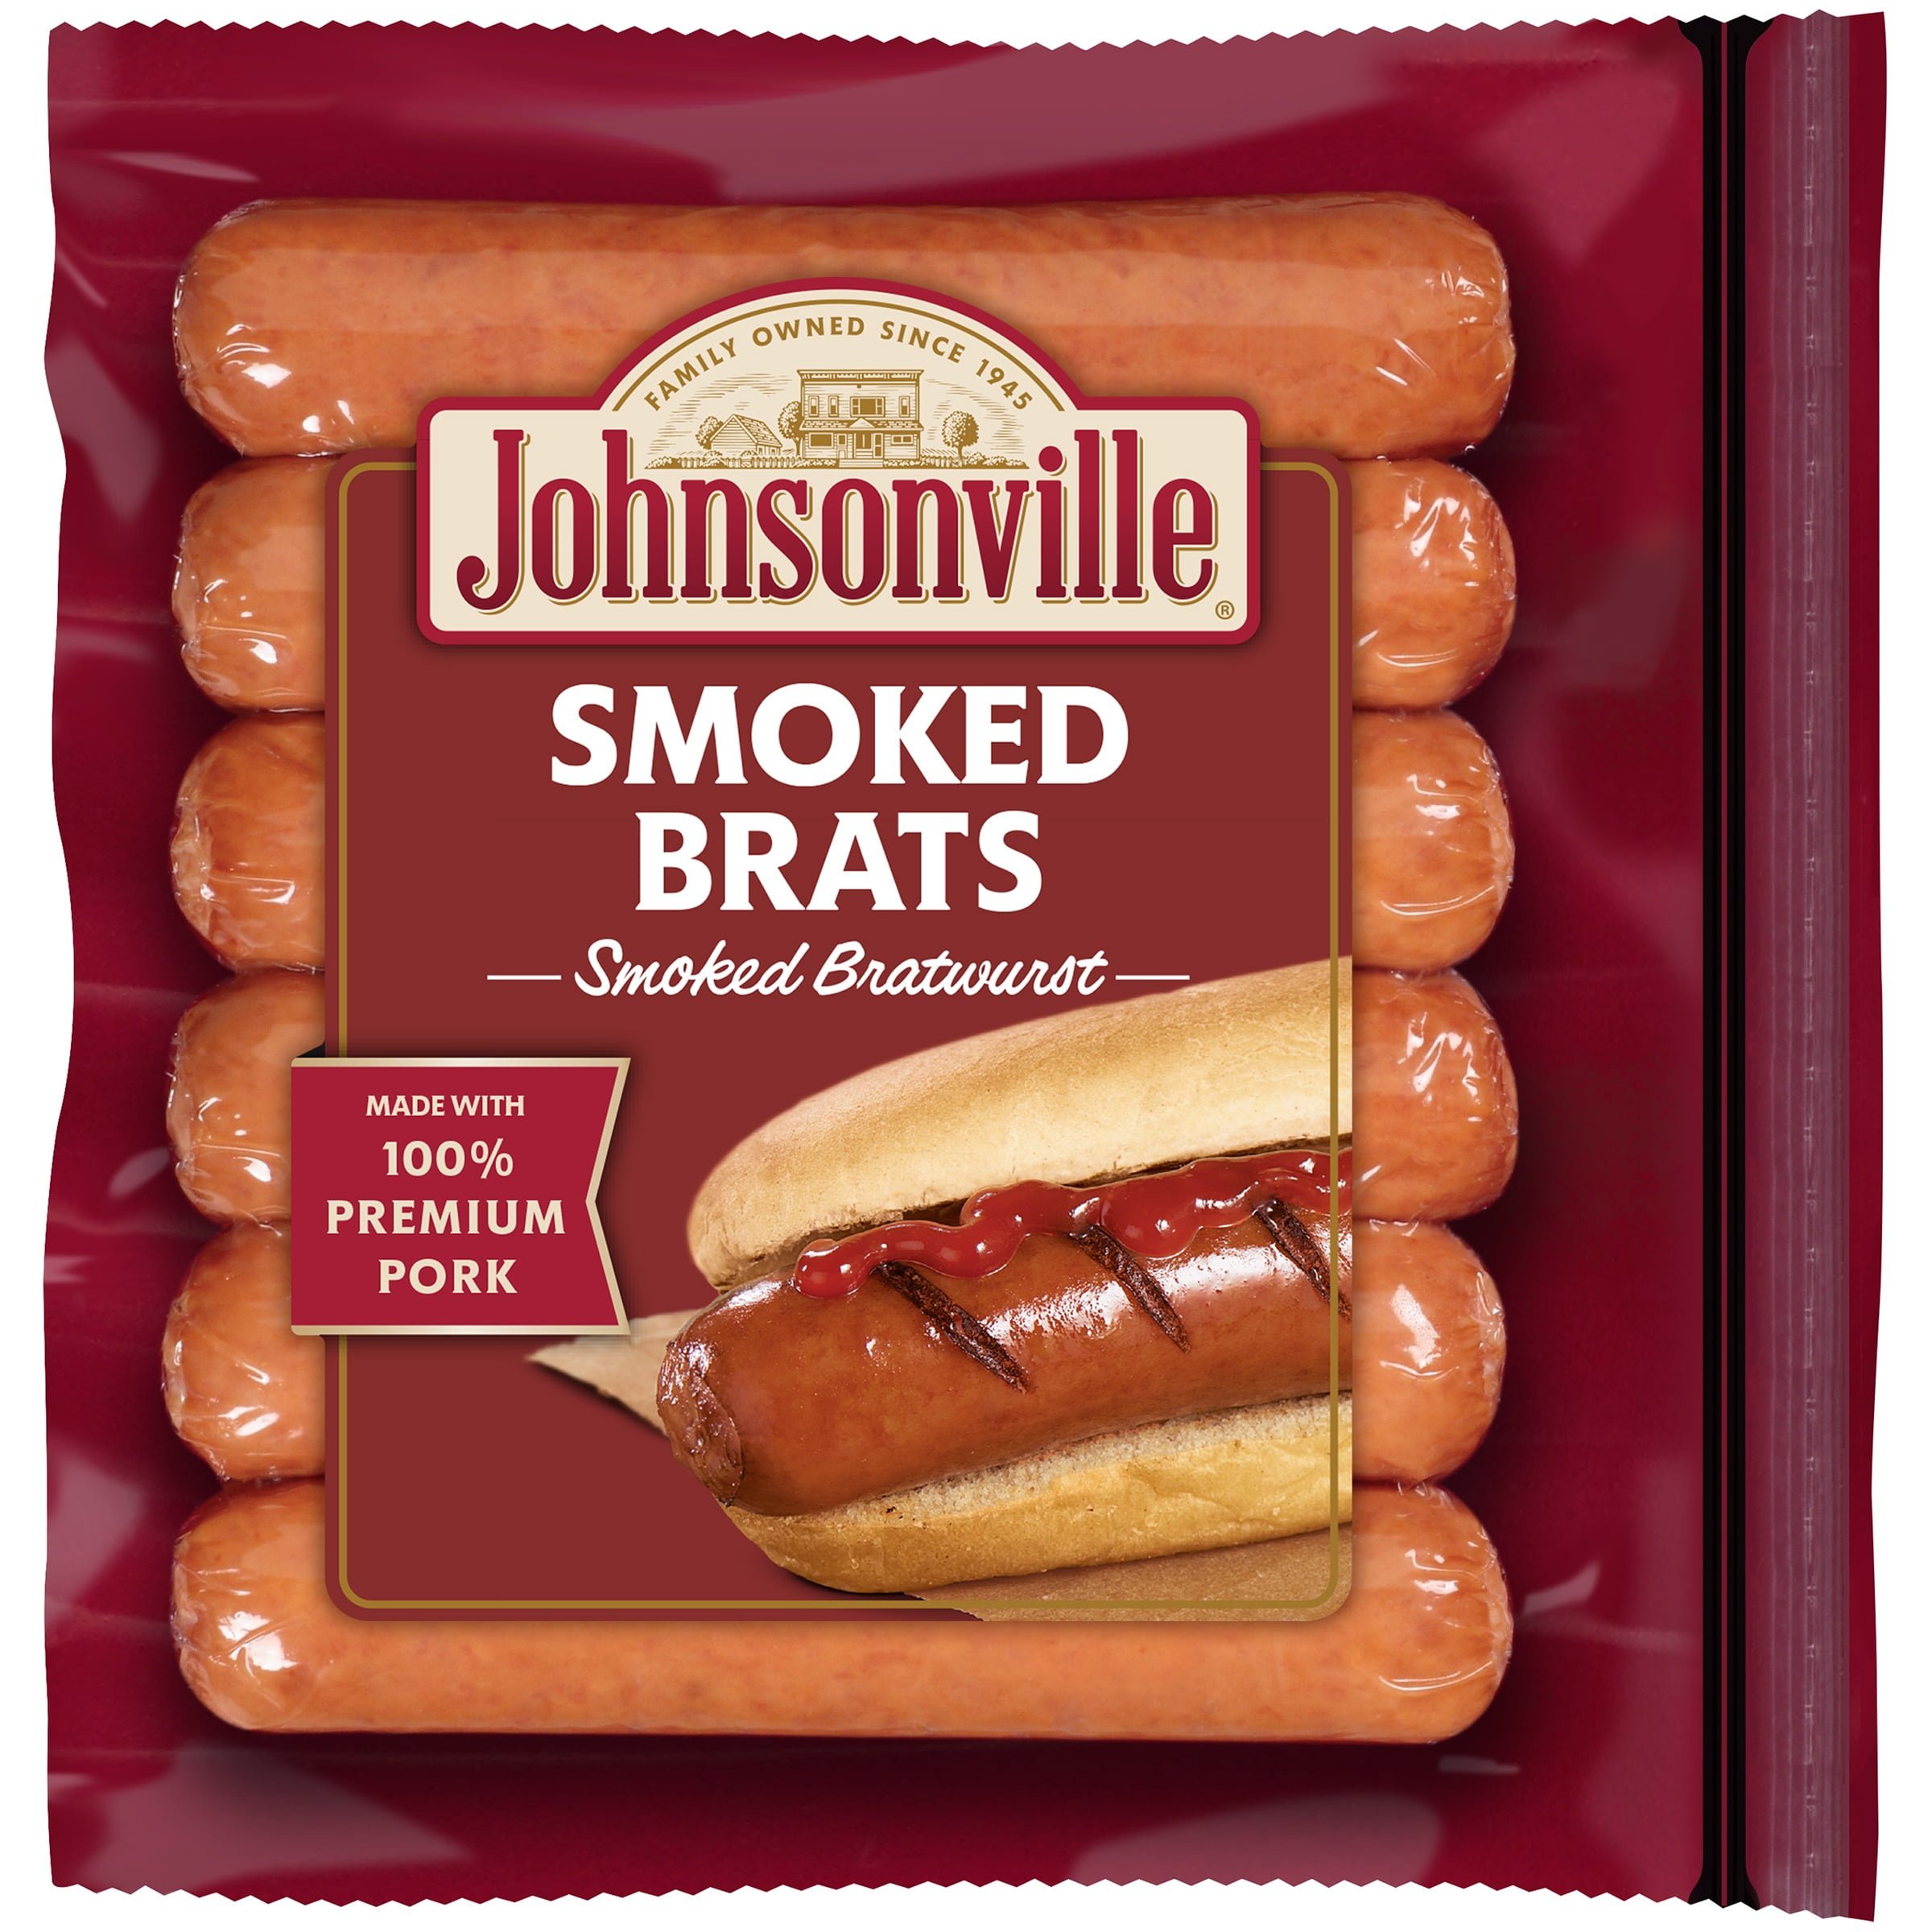 Johnsonville Smoked Brats 6 Count, 14 oz